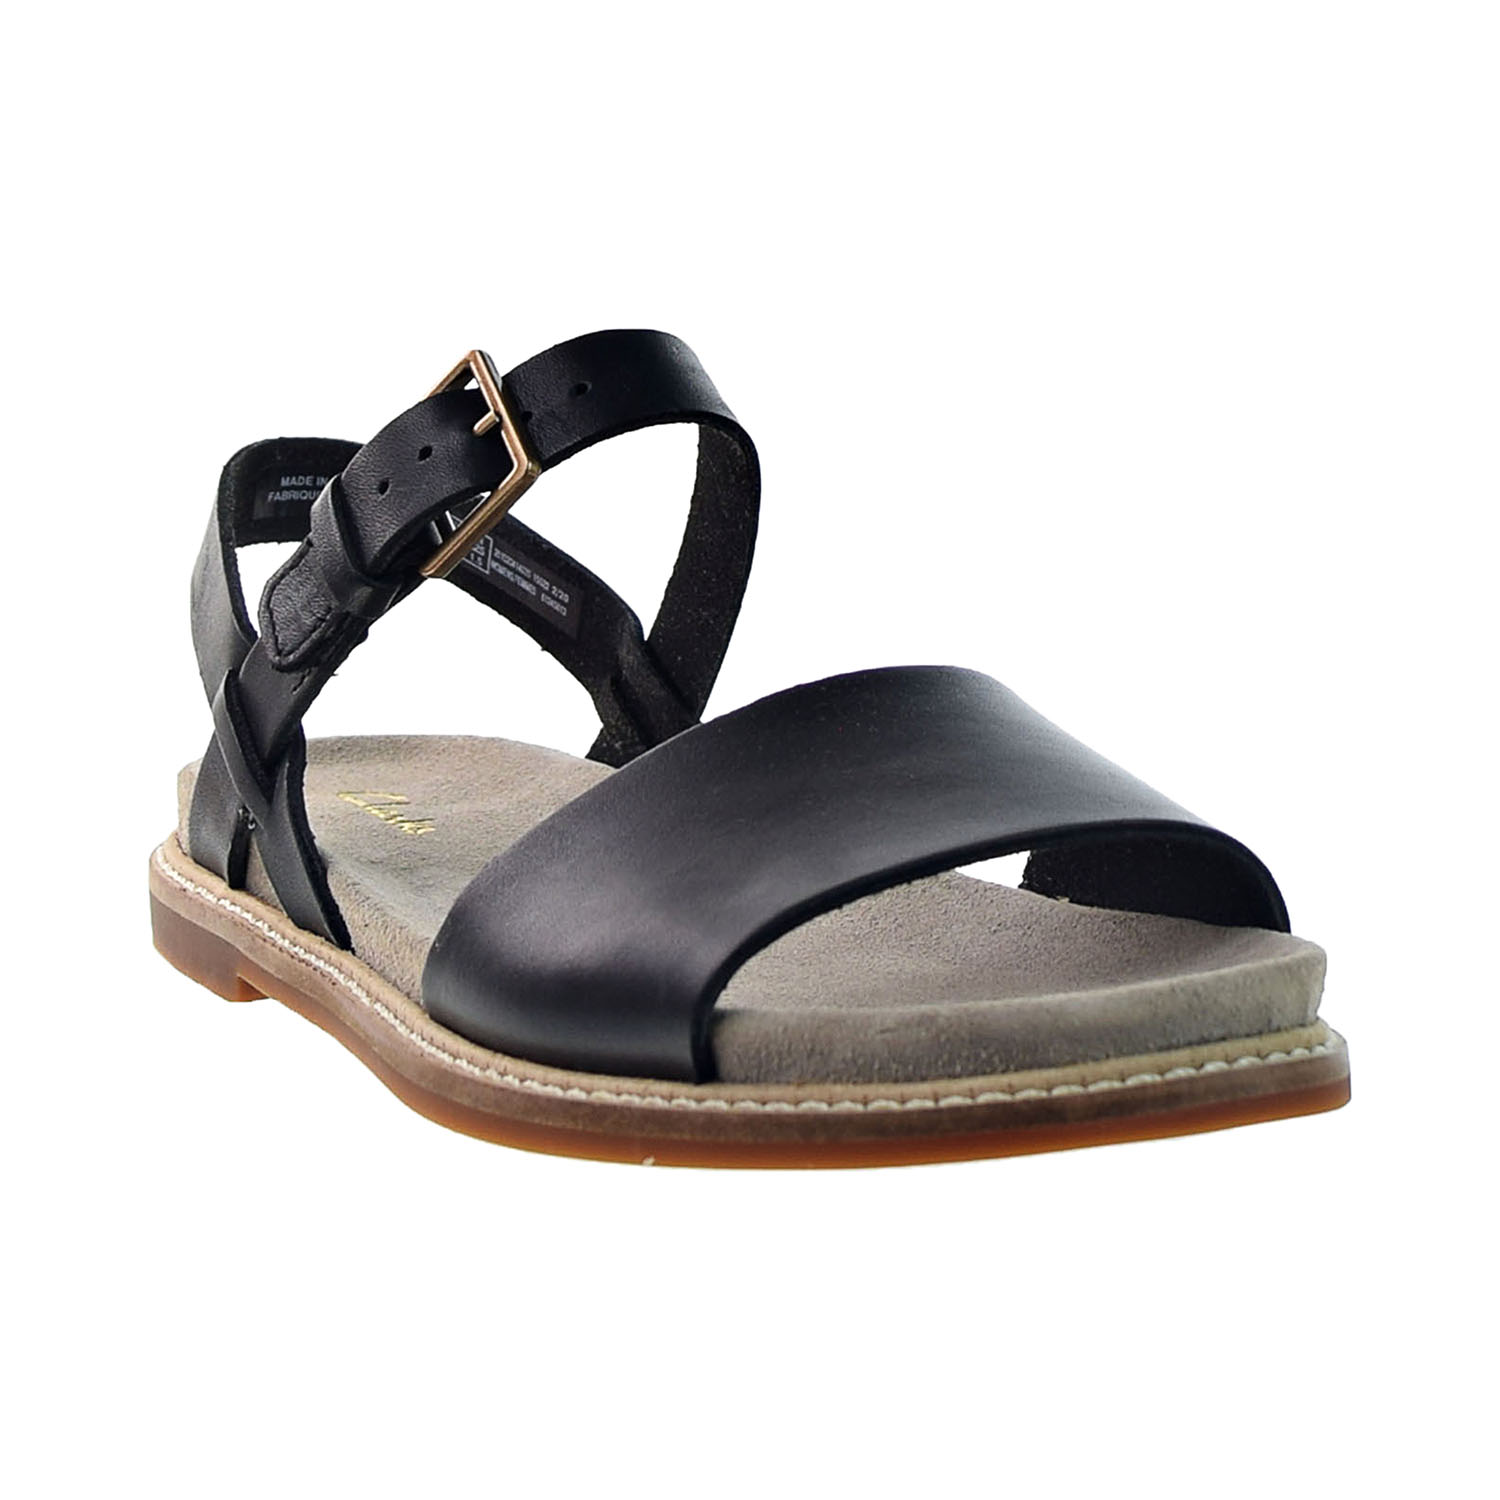 Clarks Corsio Strap Women's Flat Sandals Black Leather 26152041